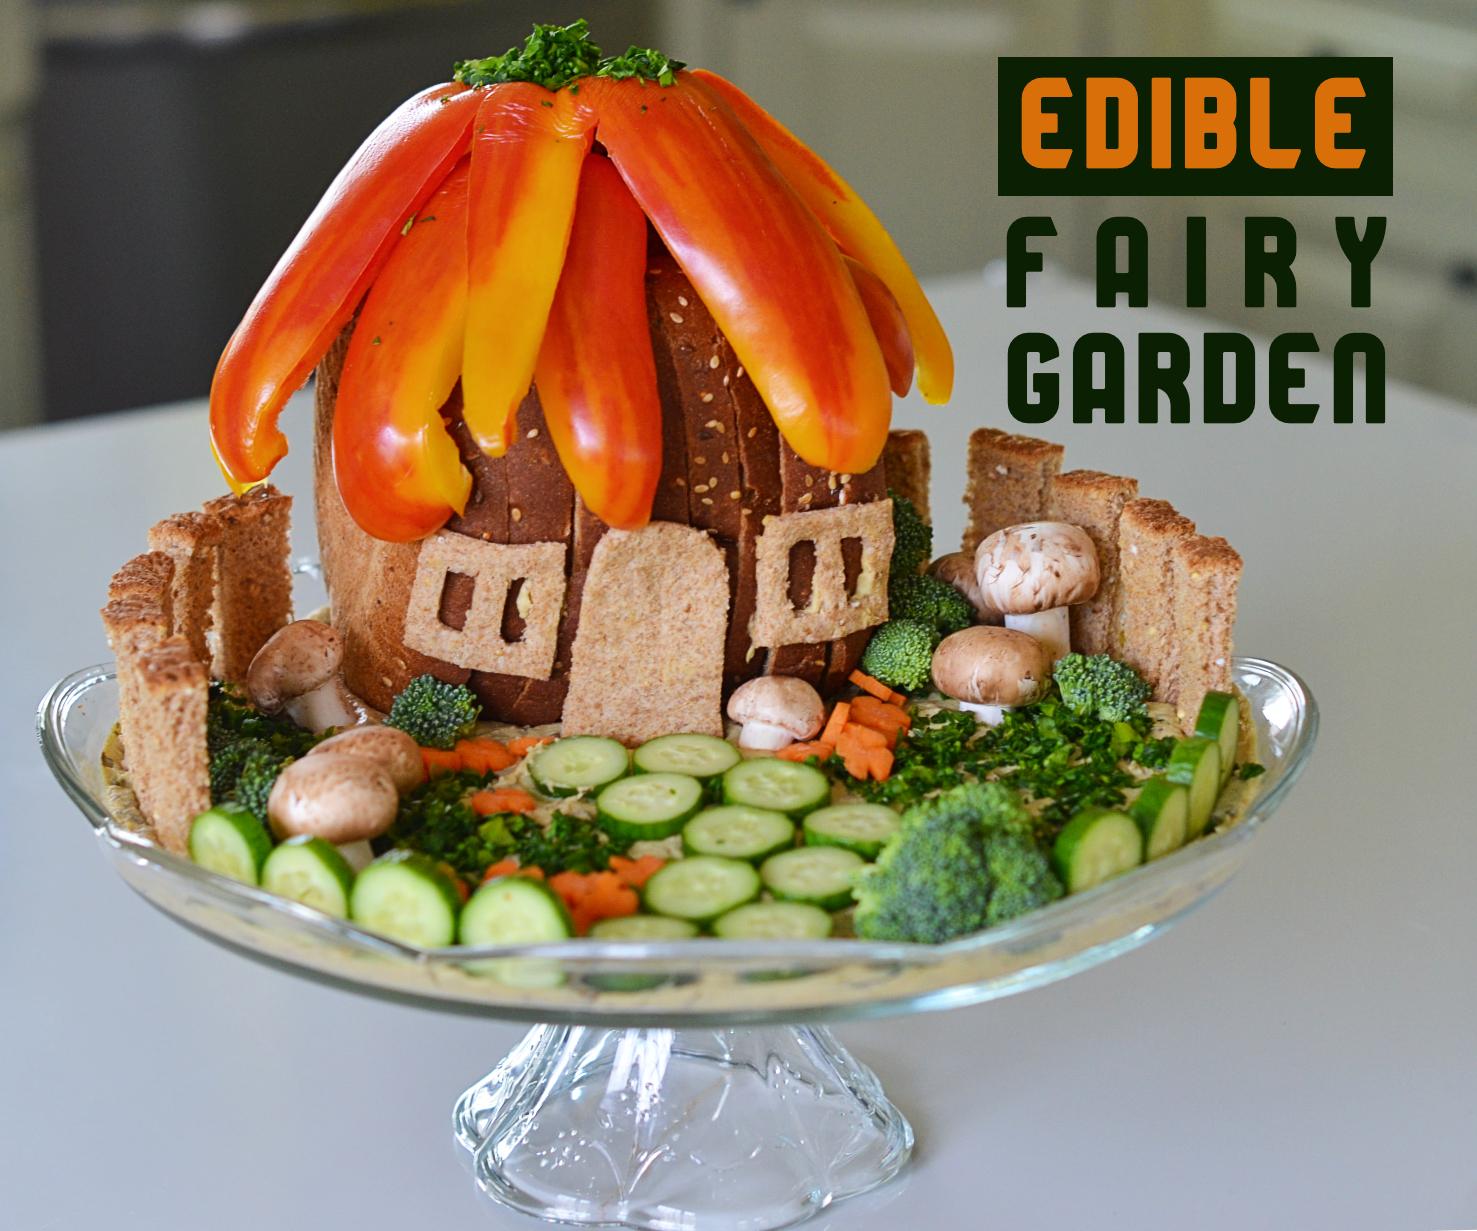 Edible Fairy Garden Hummus Platter.jpg